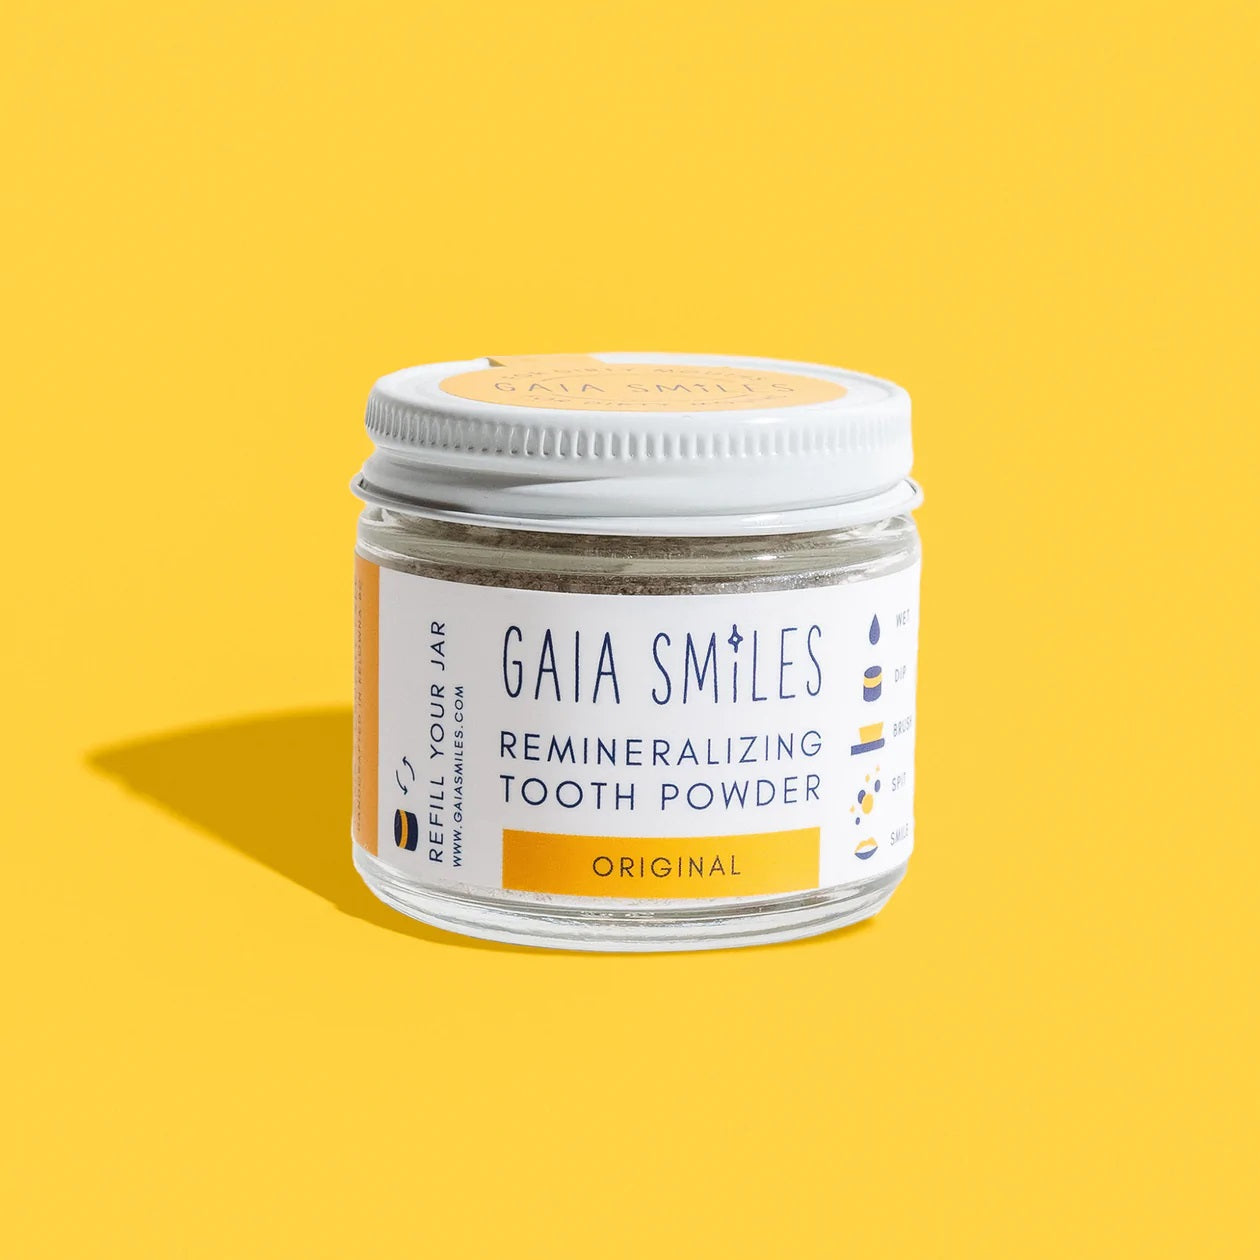 Gaia Smiles - Remineralizing Tooth Powder (Original)